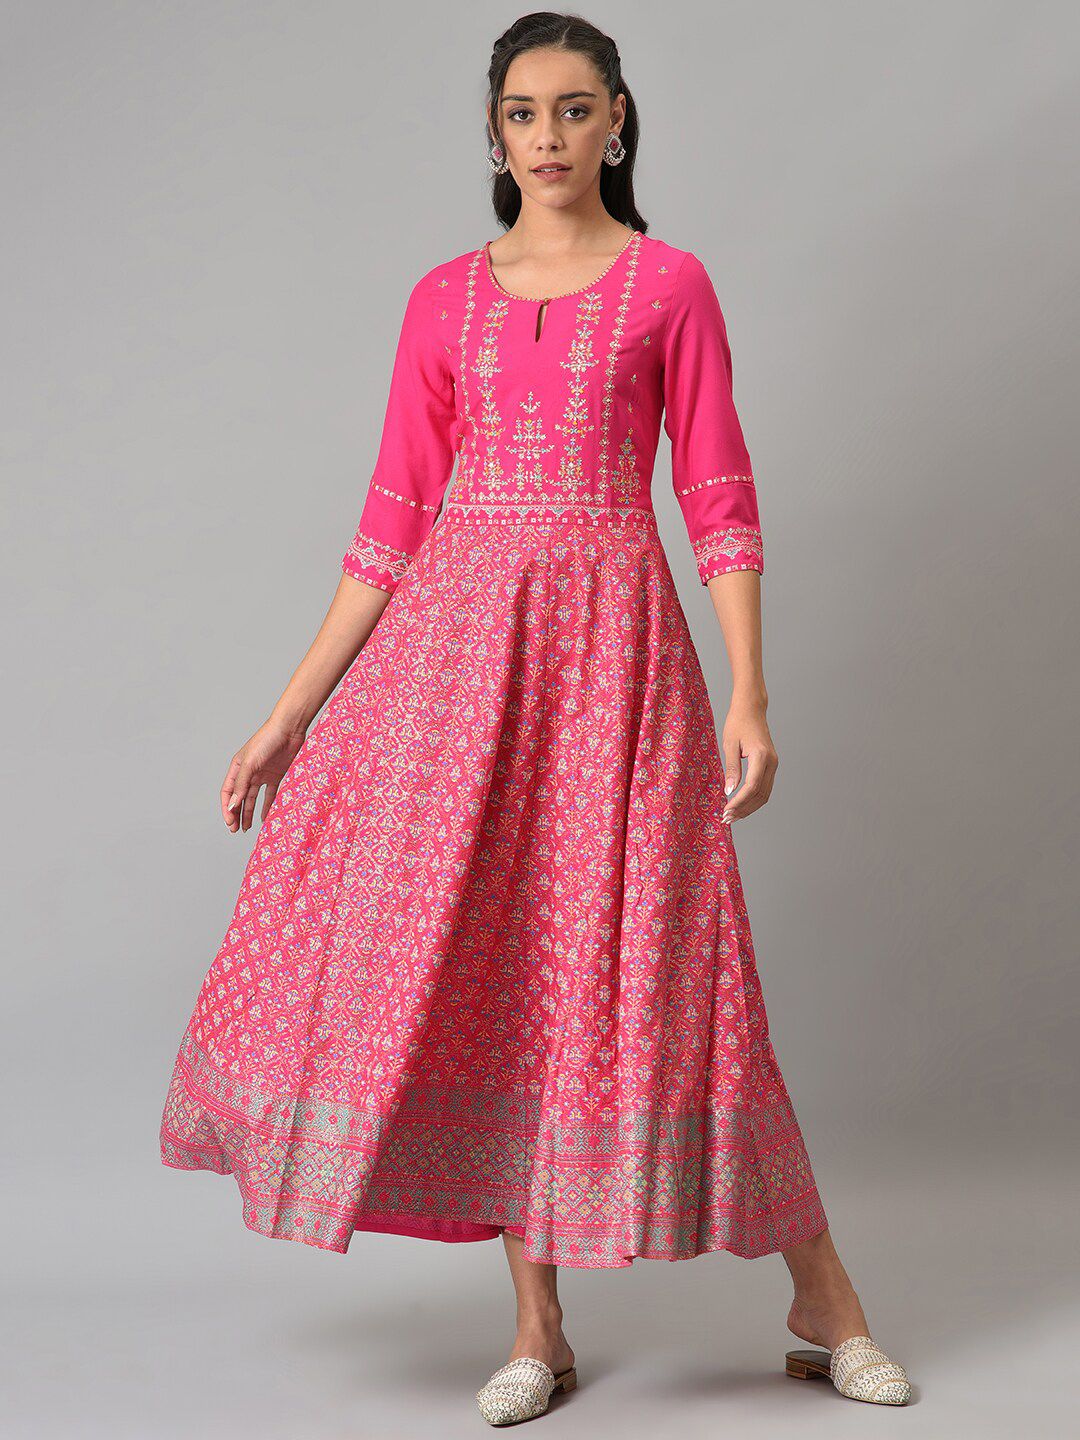 W Pink Ethnic Motifs Chiffon Ethnic Maxi Dress Price in India